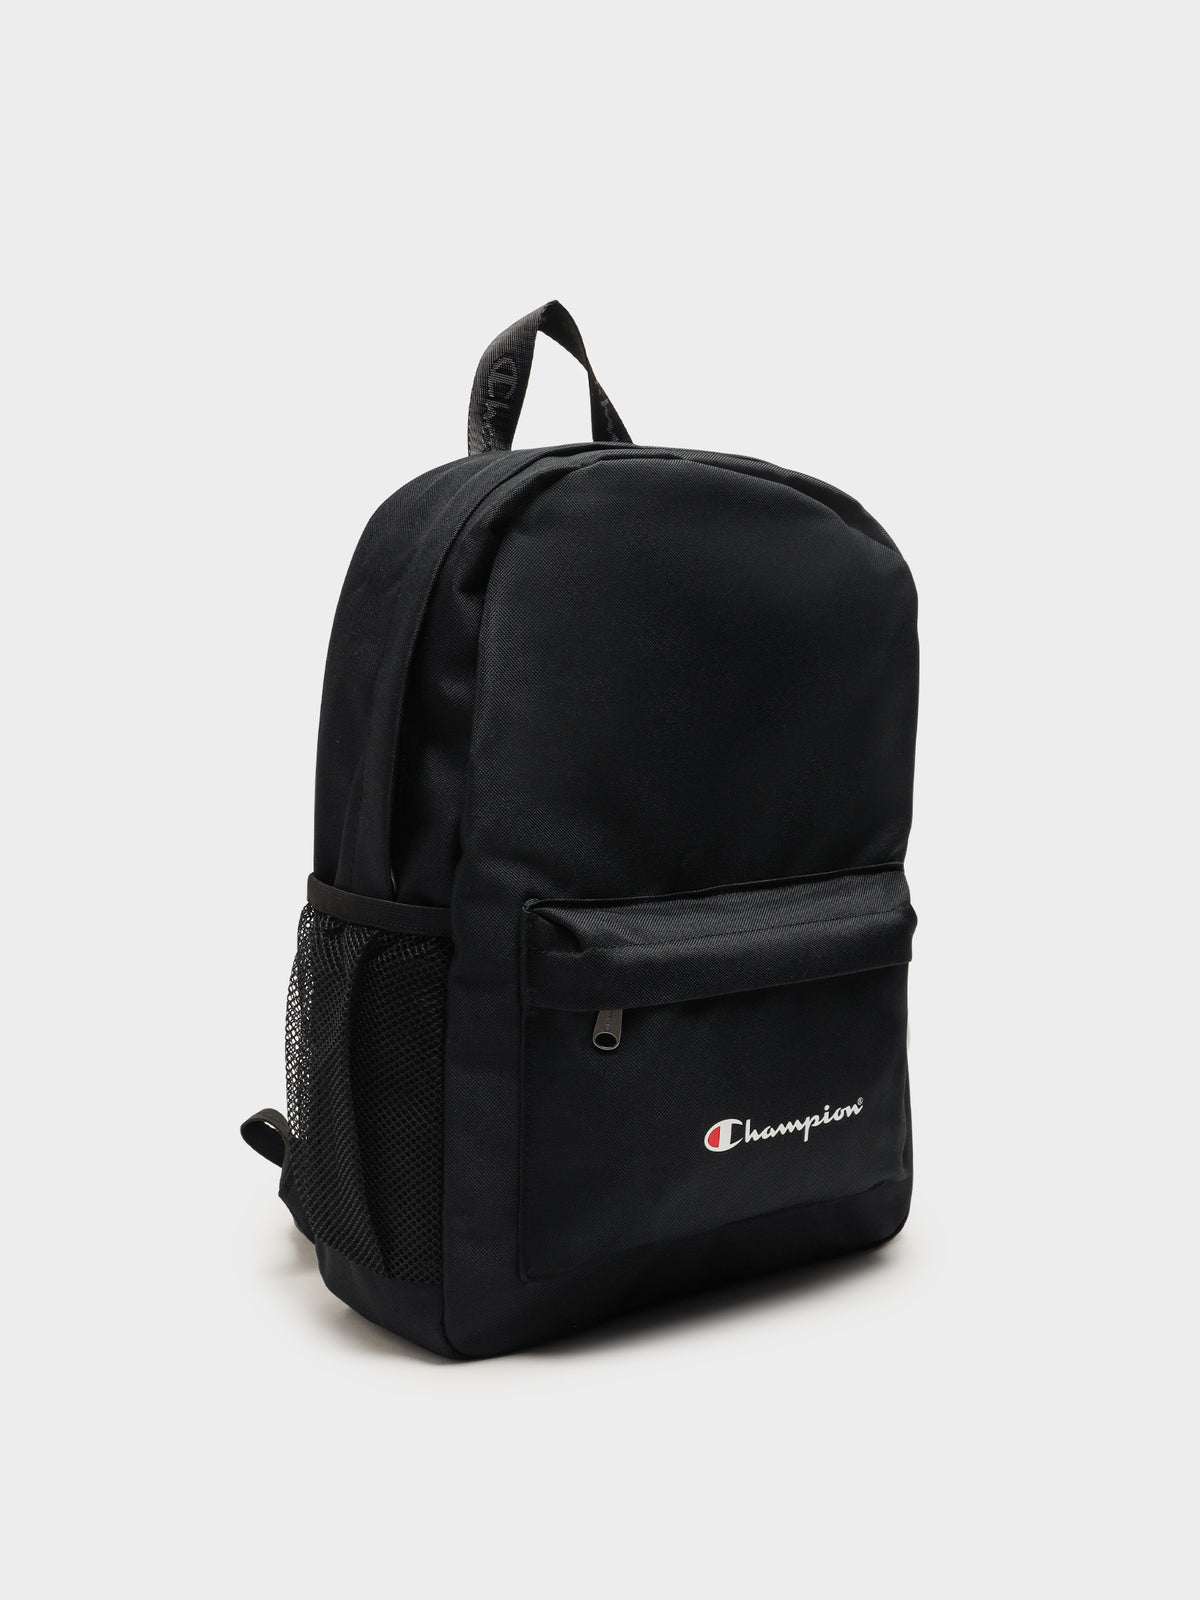 Champion Medium Backpack in Black